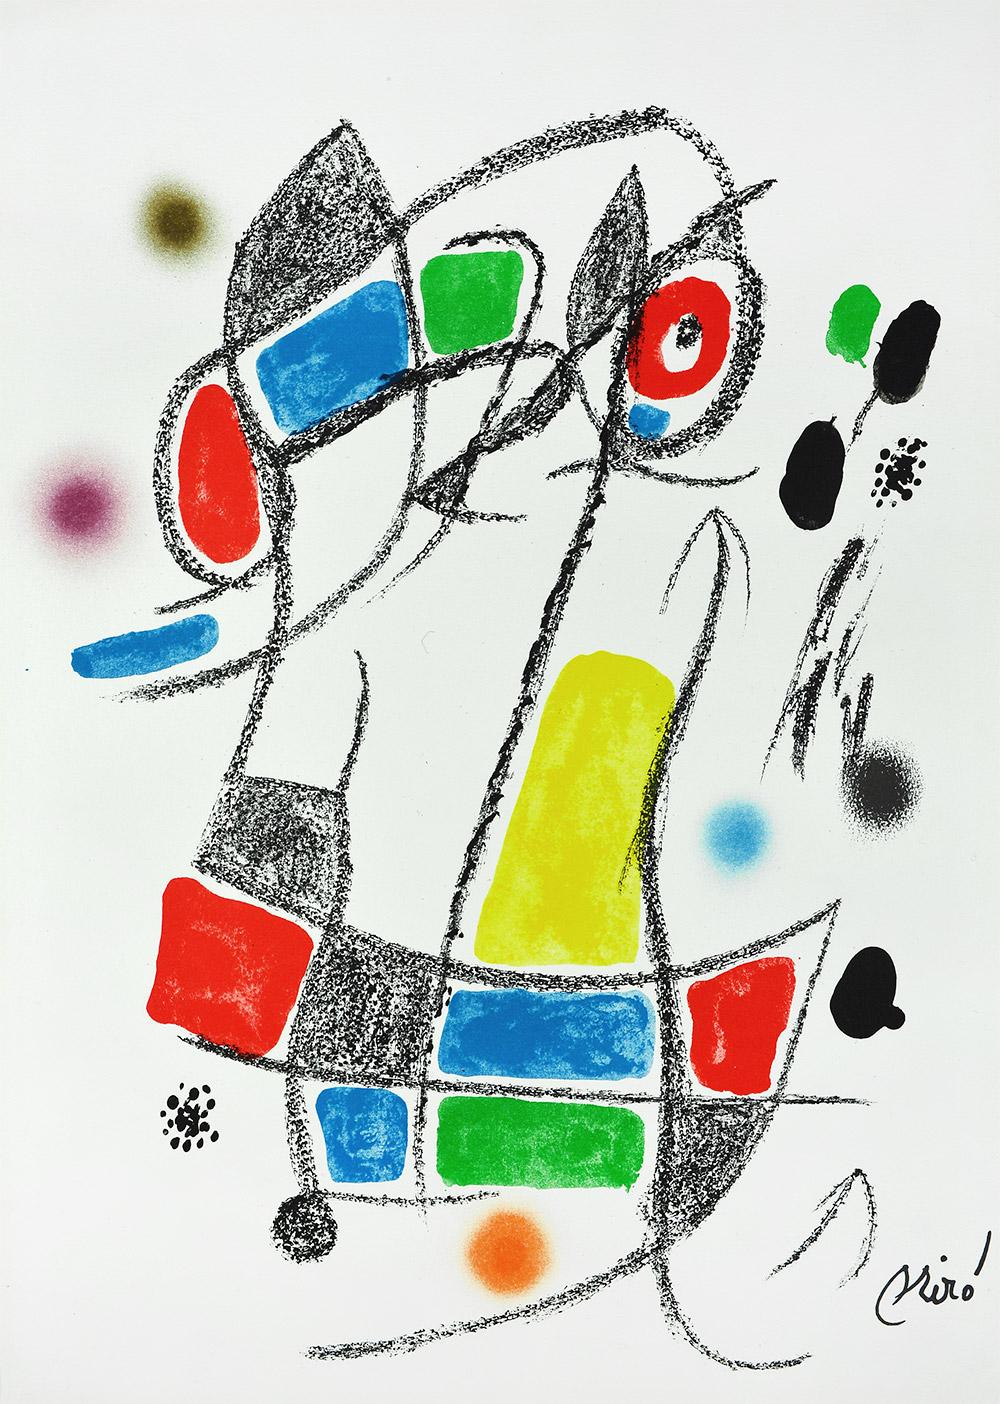 Joan Miró - Maravillas con variaciones acrósticas en el jardín de Miró I
Date of creation: 1975
Medium: Lithograph
Media: Gvarro paper
Edition: 1500
Size: 49,5 x 35,5 cm
Condition: In very good conditions and never framed
Observations: Lithograph on